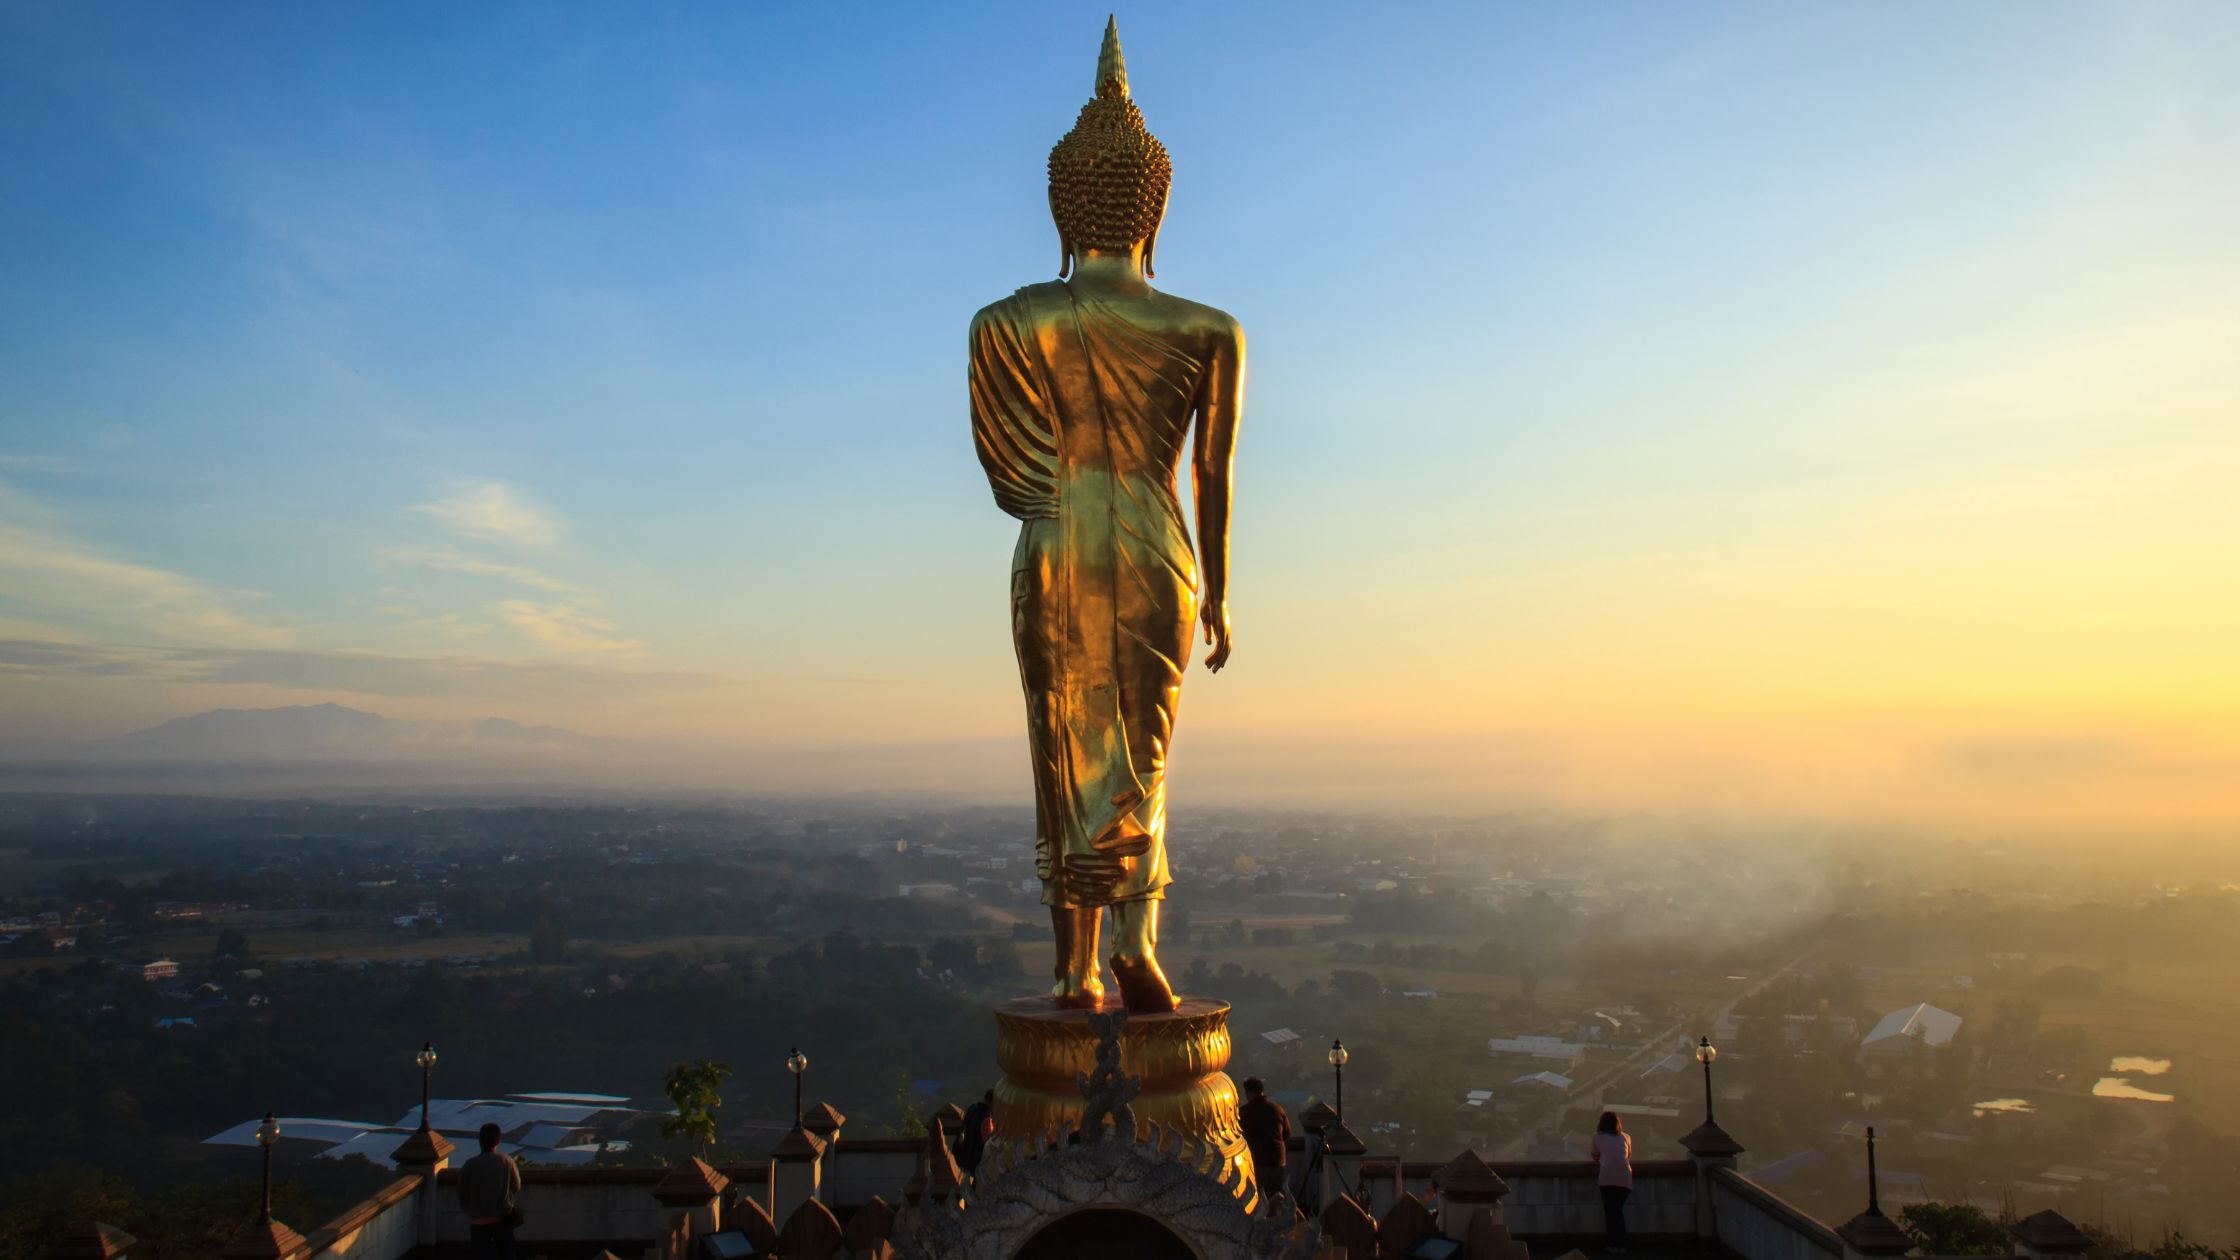 Estatua dorada de Buda en el templo de Khao Noi, provincia de Nan, Tailandia